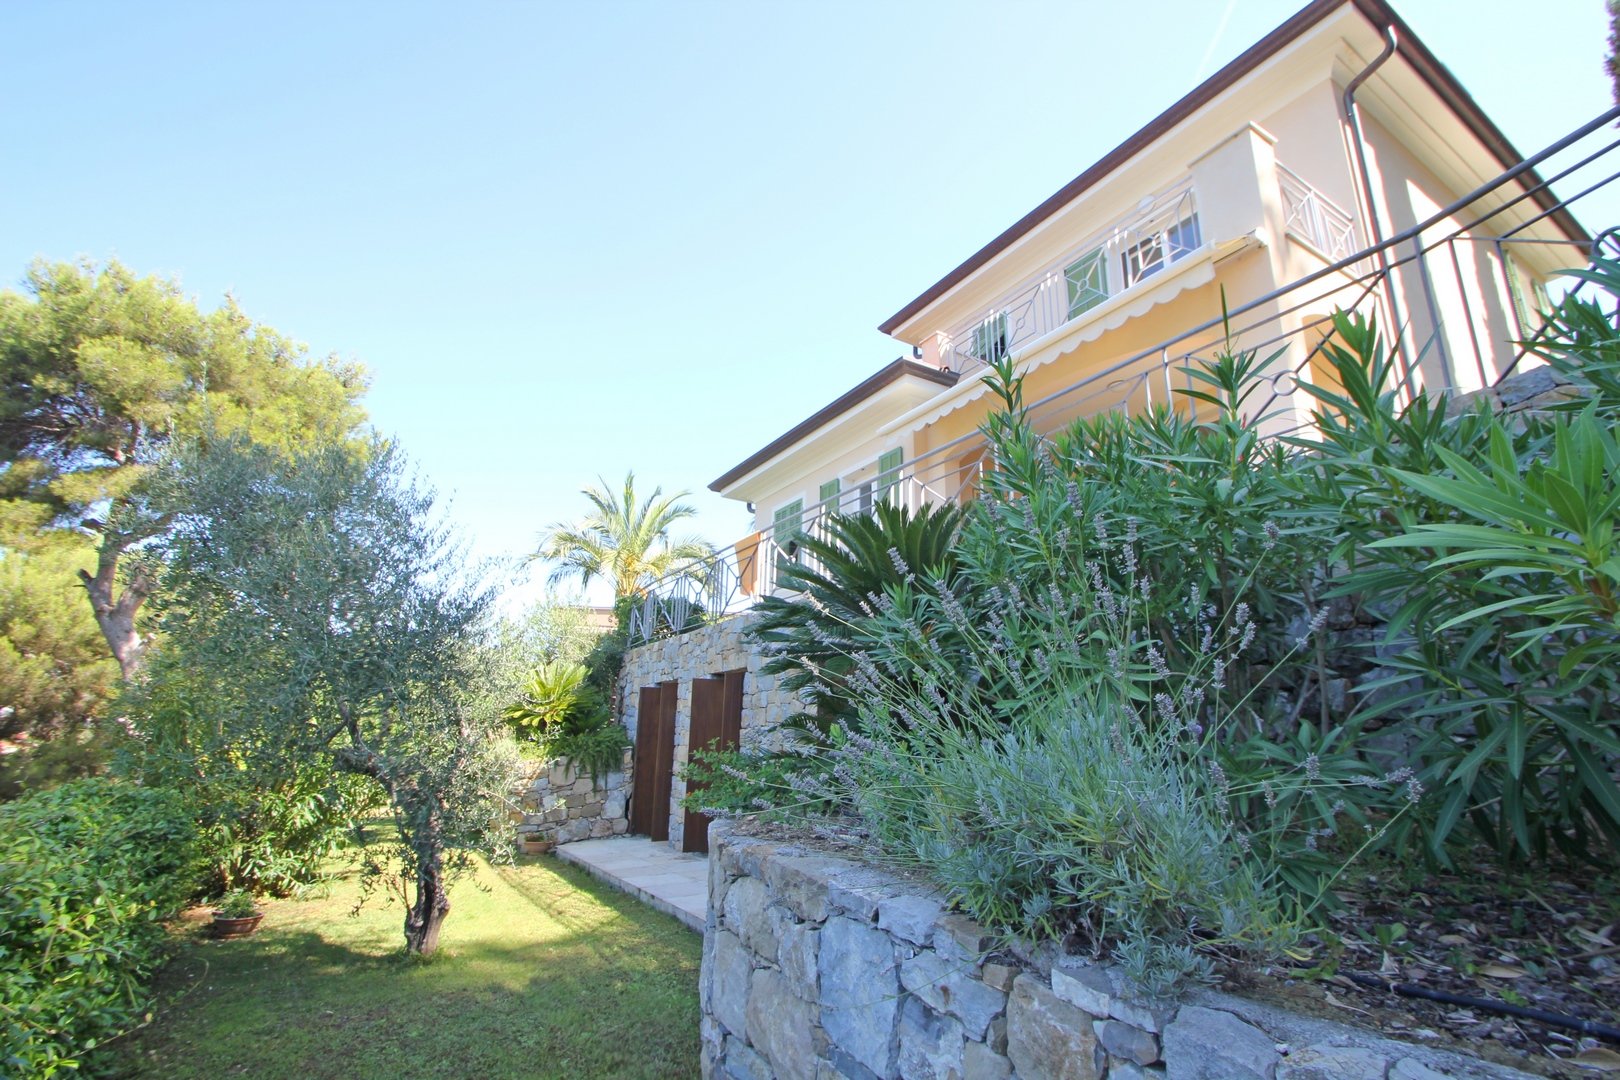 New villa in Bordighera